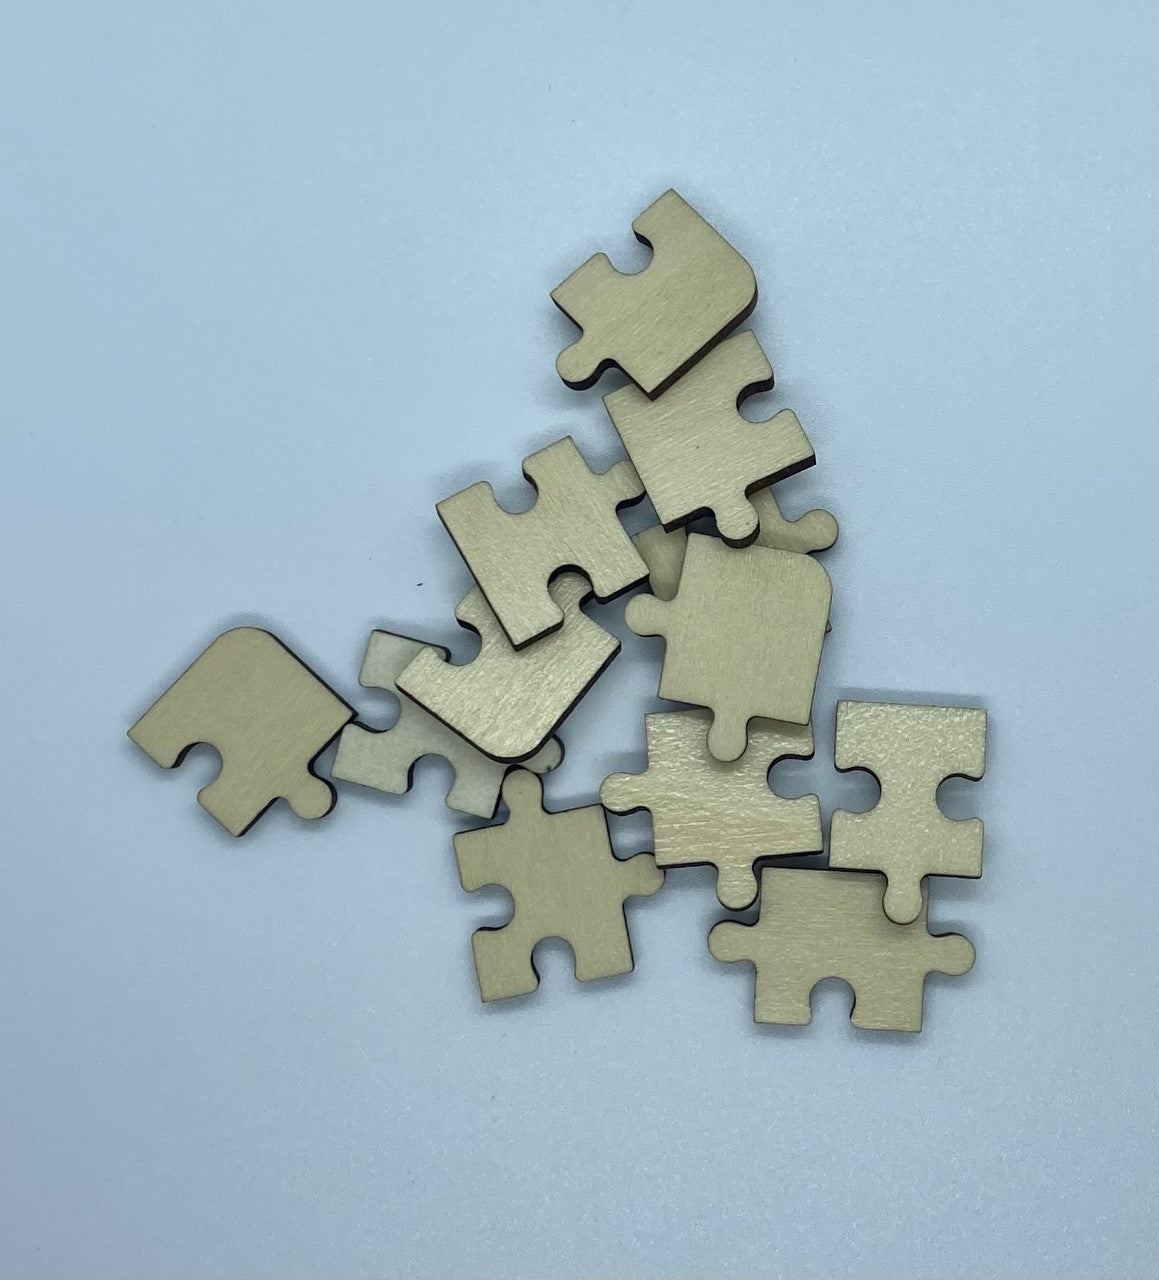 Paint Your Own Mini Puzzle - TINY Pieces!